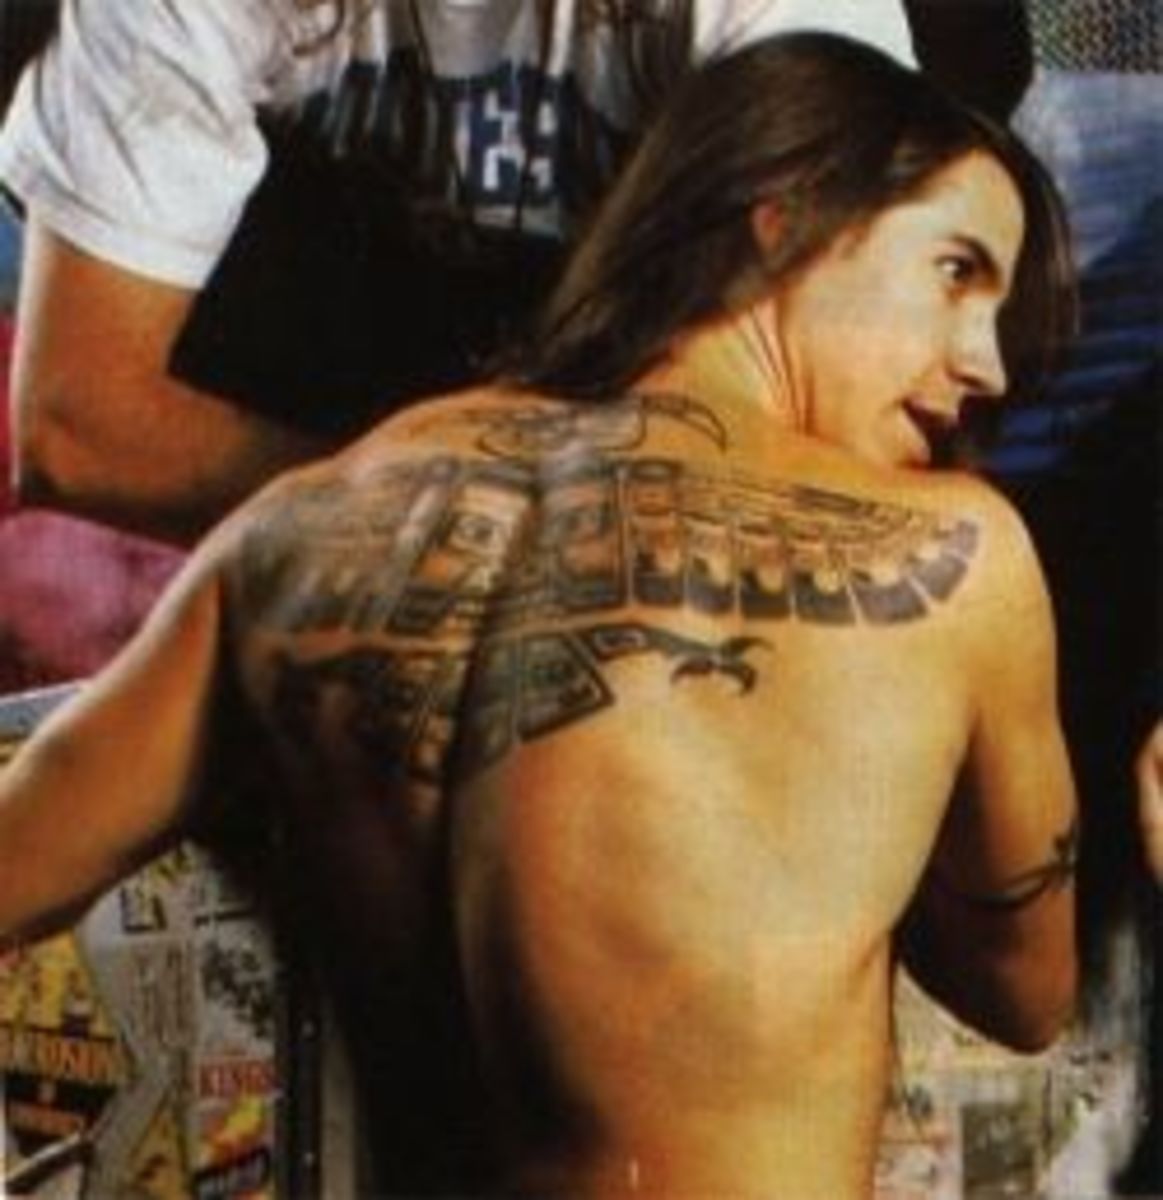 Haida-style tattoo by Hanky Panky, worn by RHCP singer Anthony Kiedis